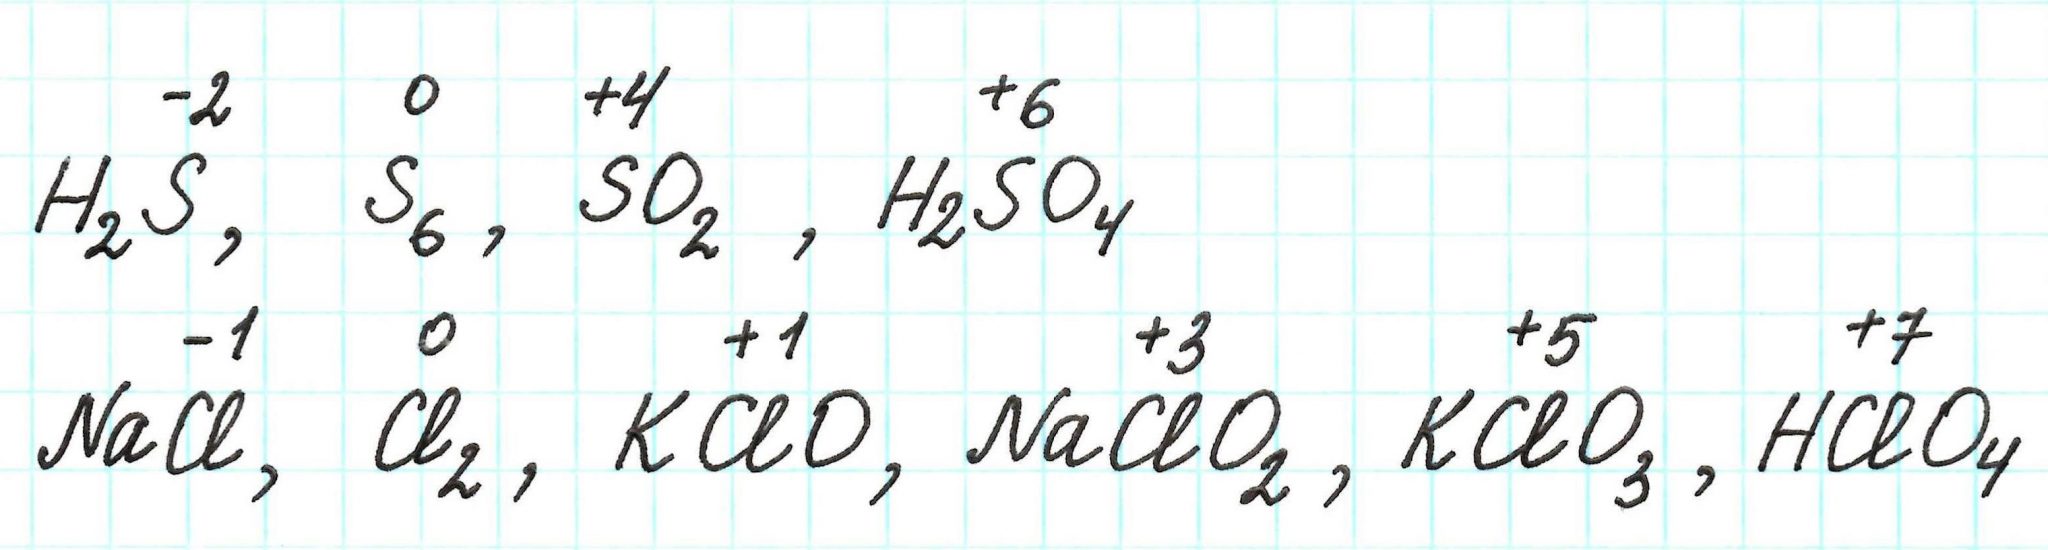 Определите степень окисления na2so4. Хром степень окисления. Ch4 степень окисления. Хром степень окисления в соединениях. Степень окисления кетона.